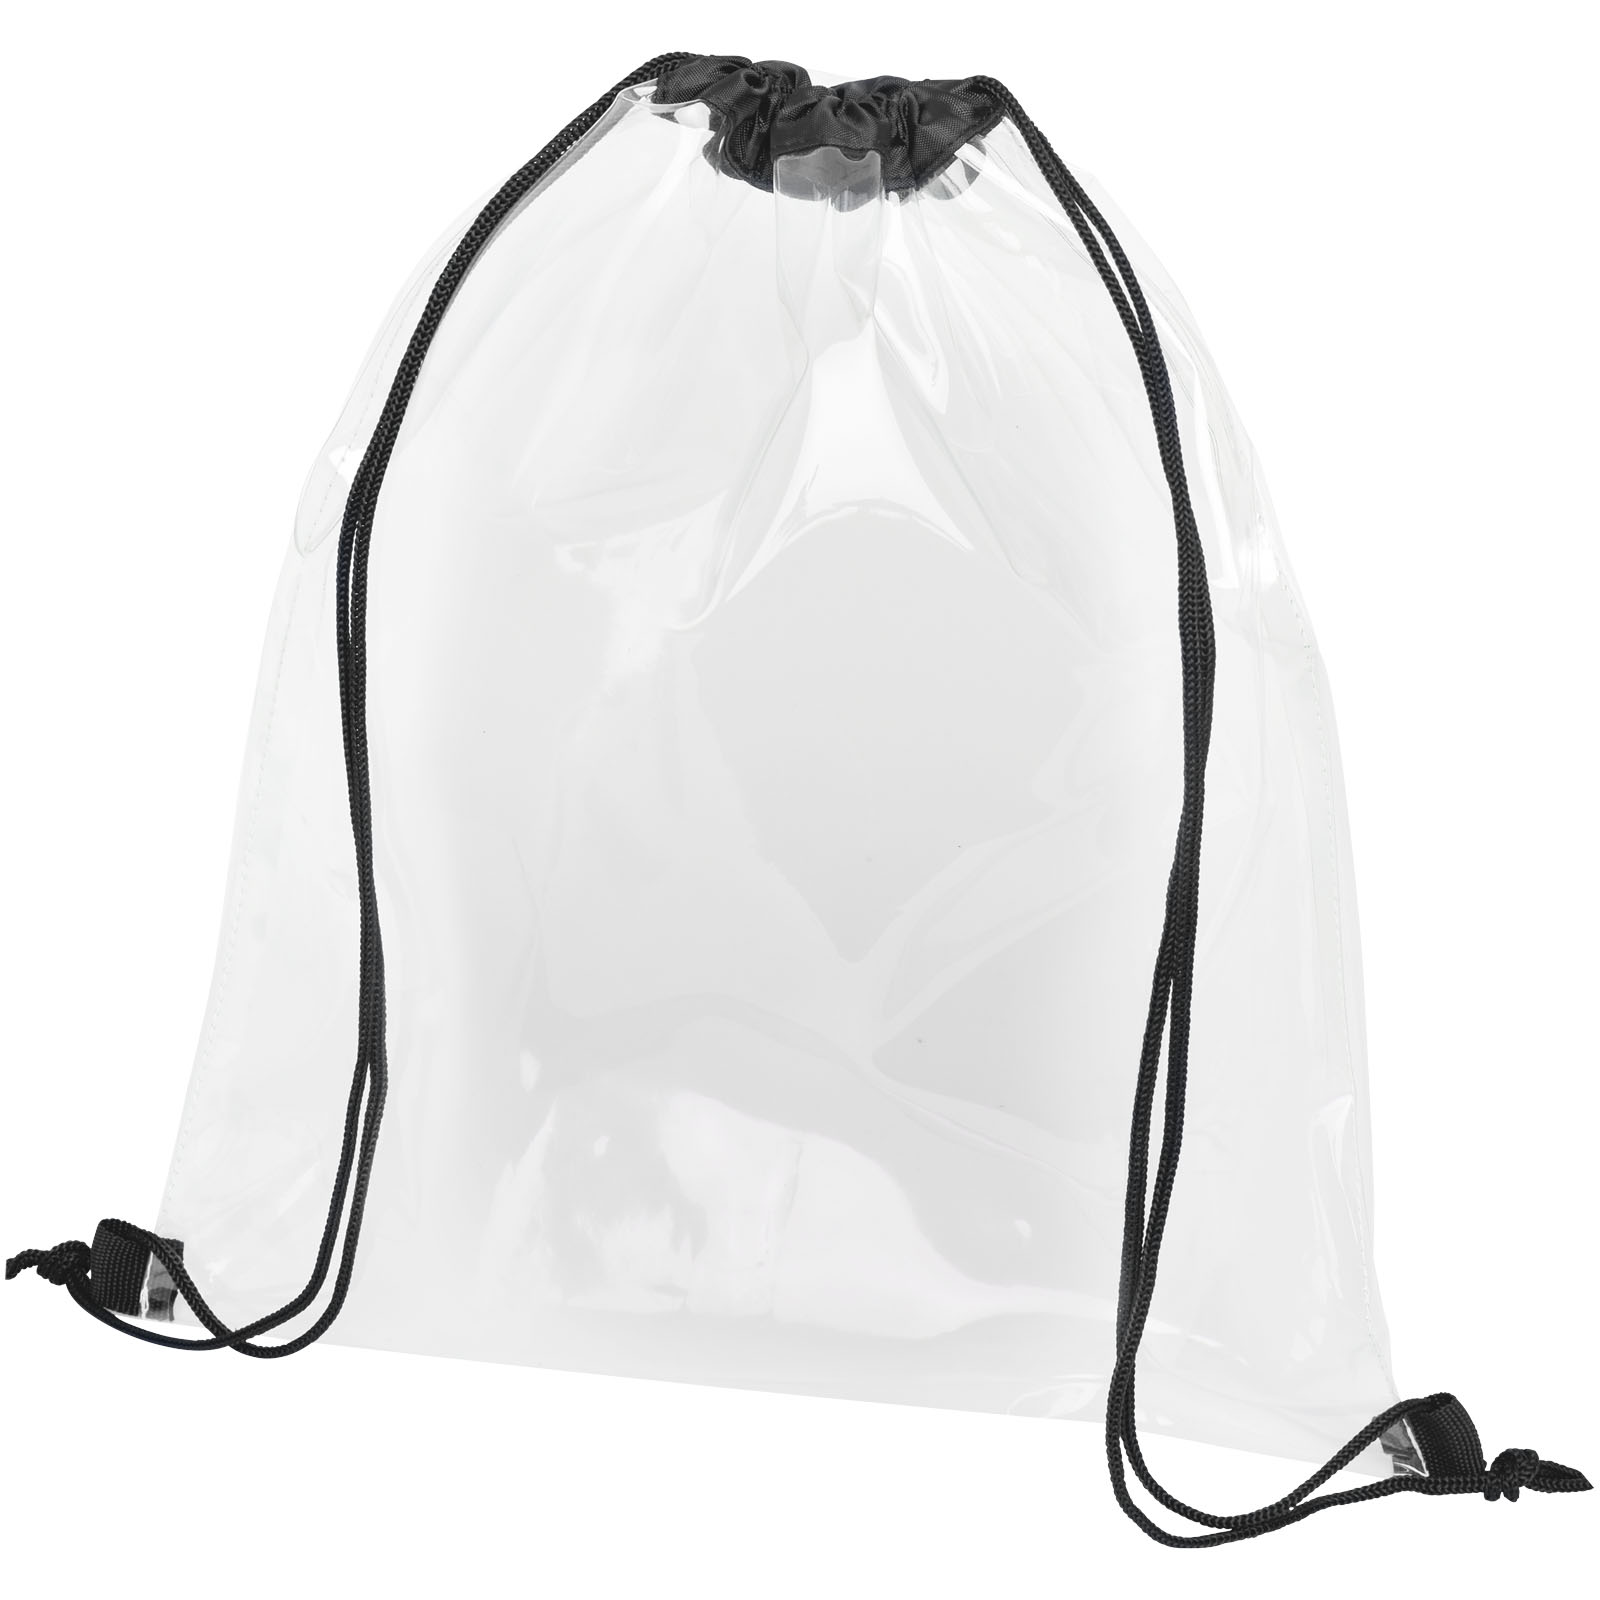 Drawstring Bags - Lancaster transparent drawstring bag 5L